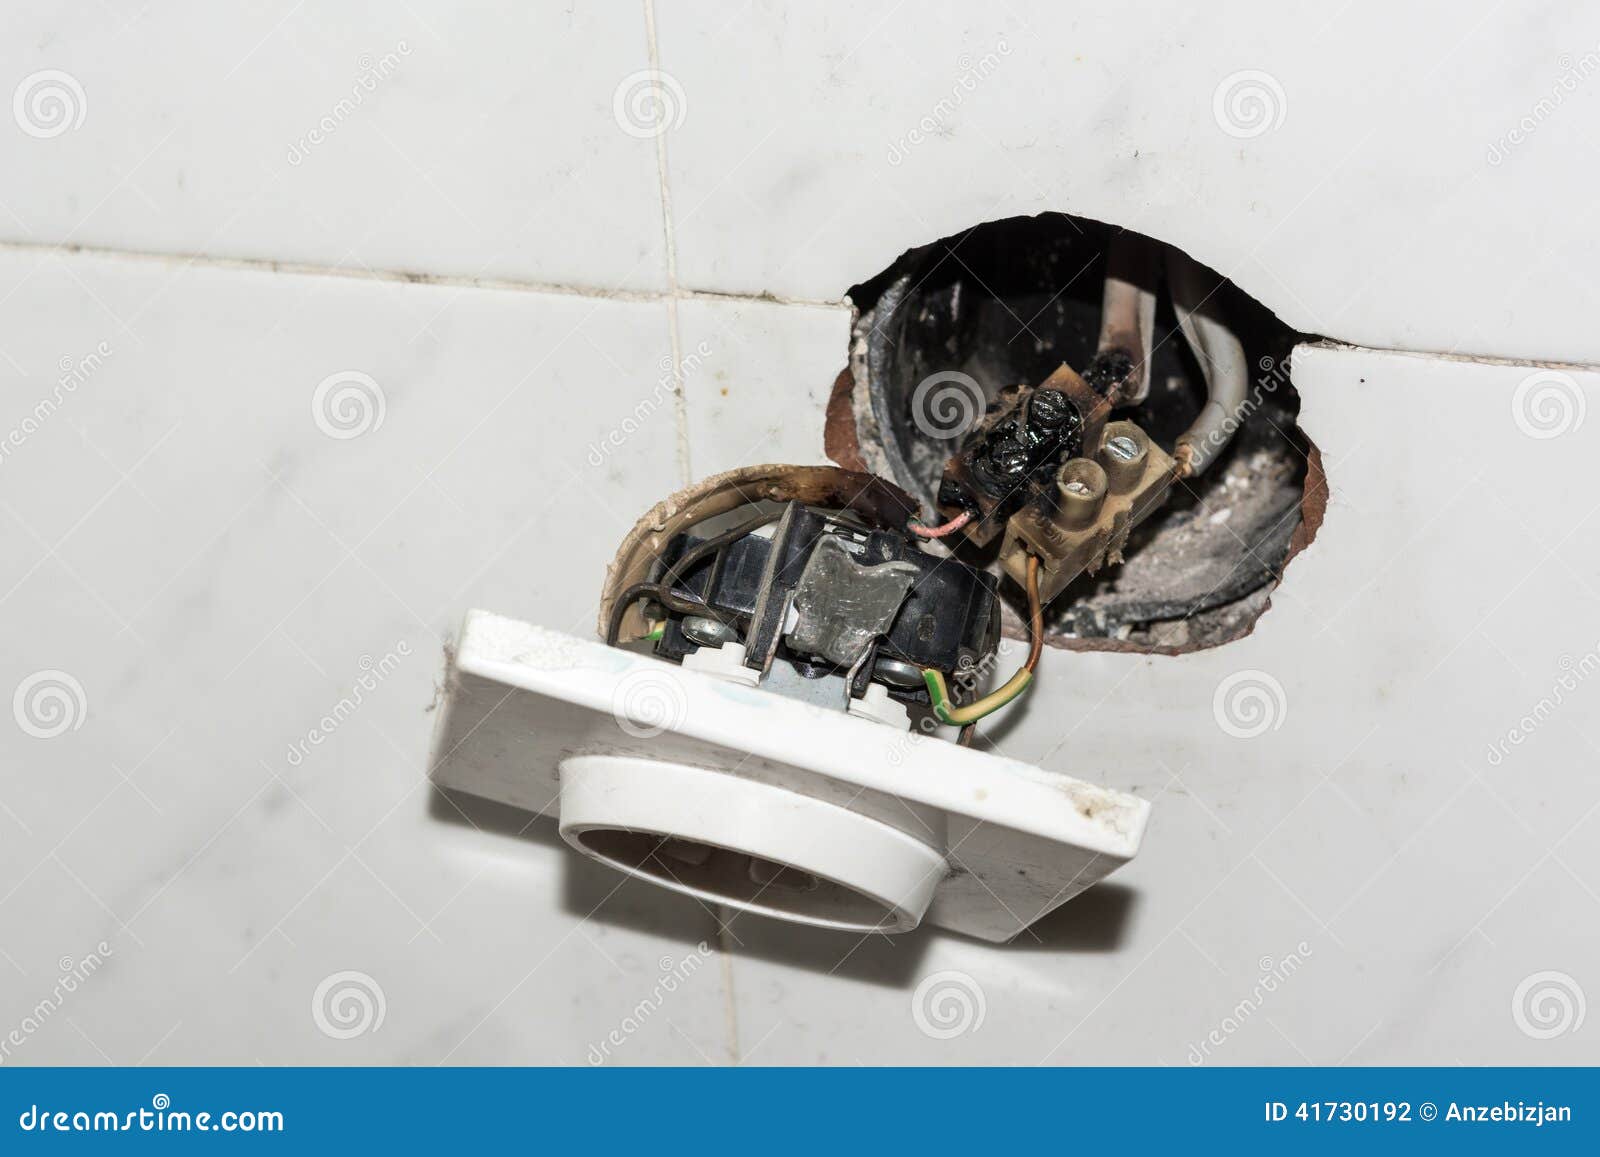 damaged electrical socket